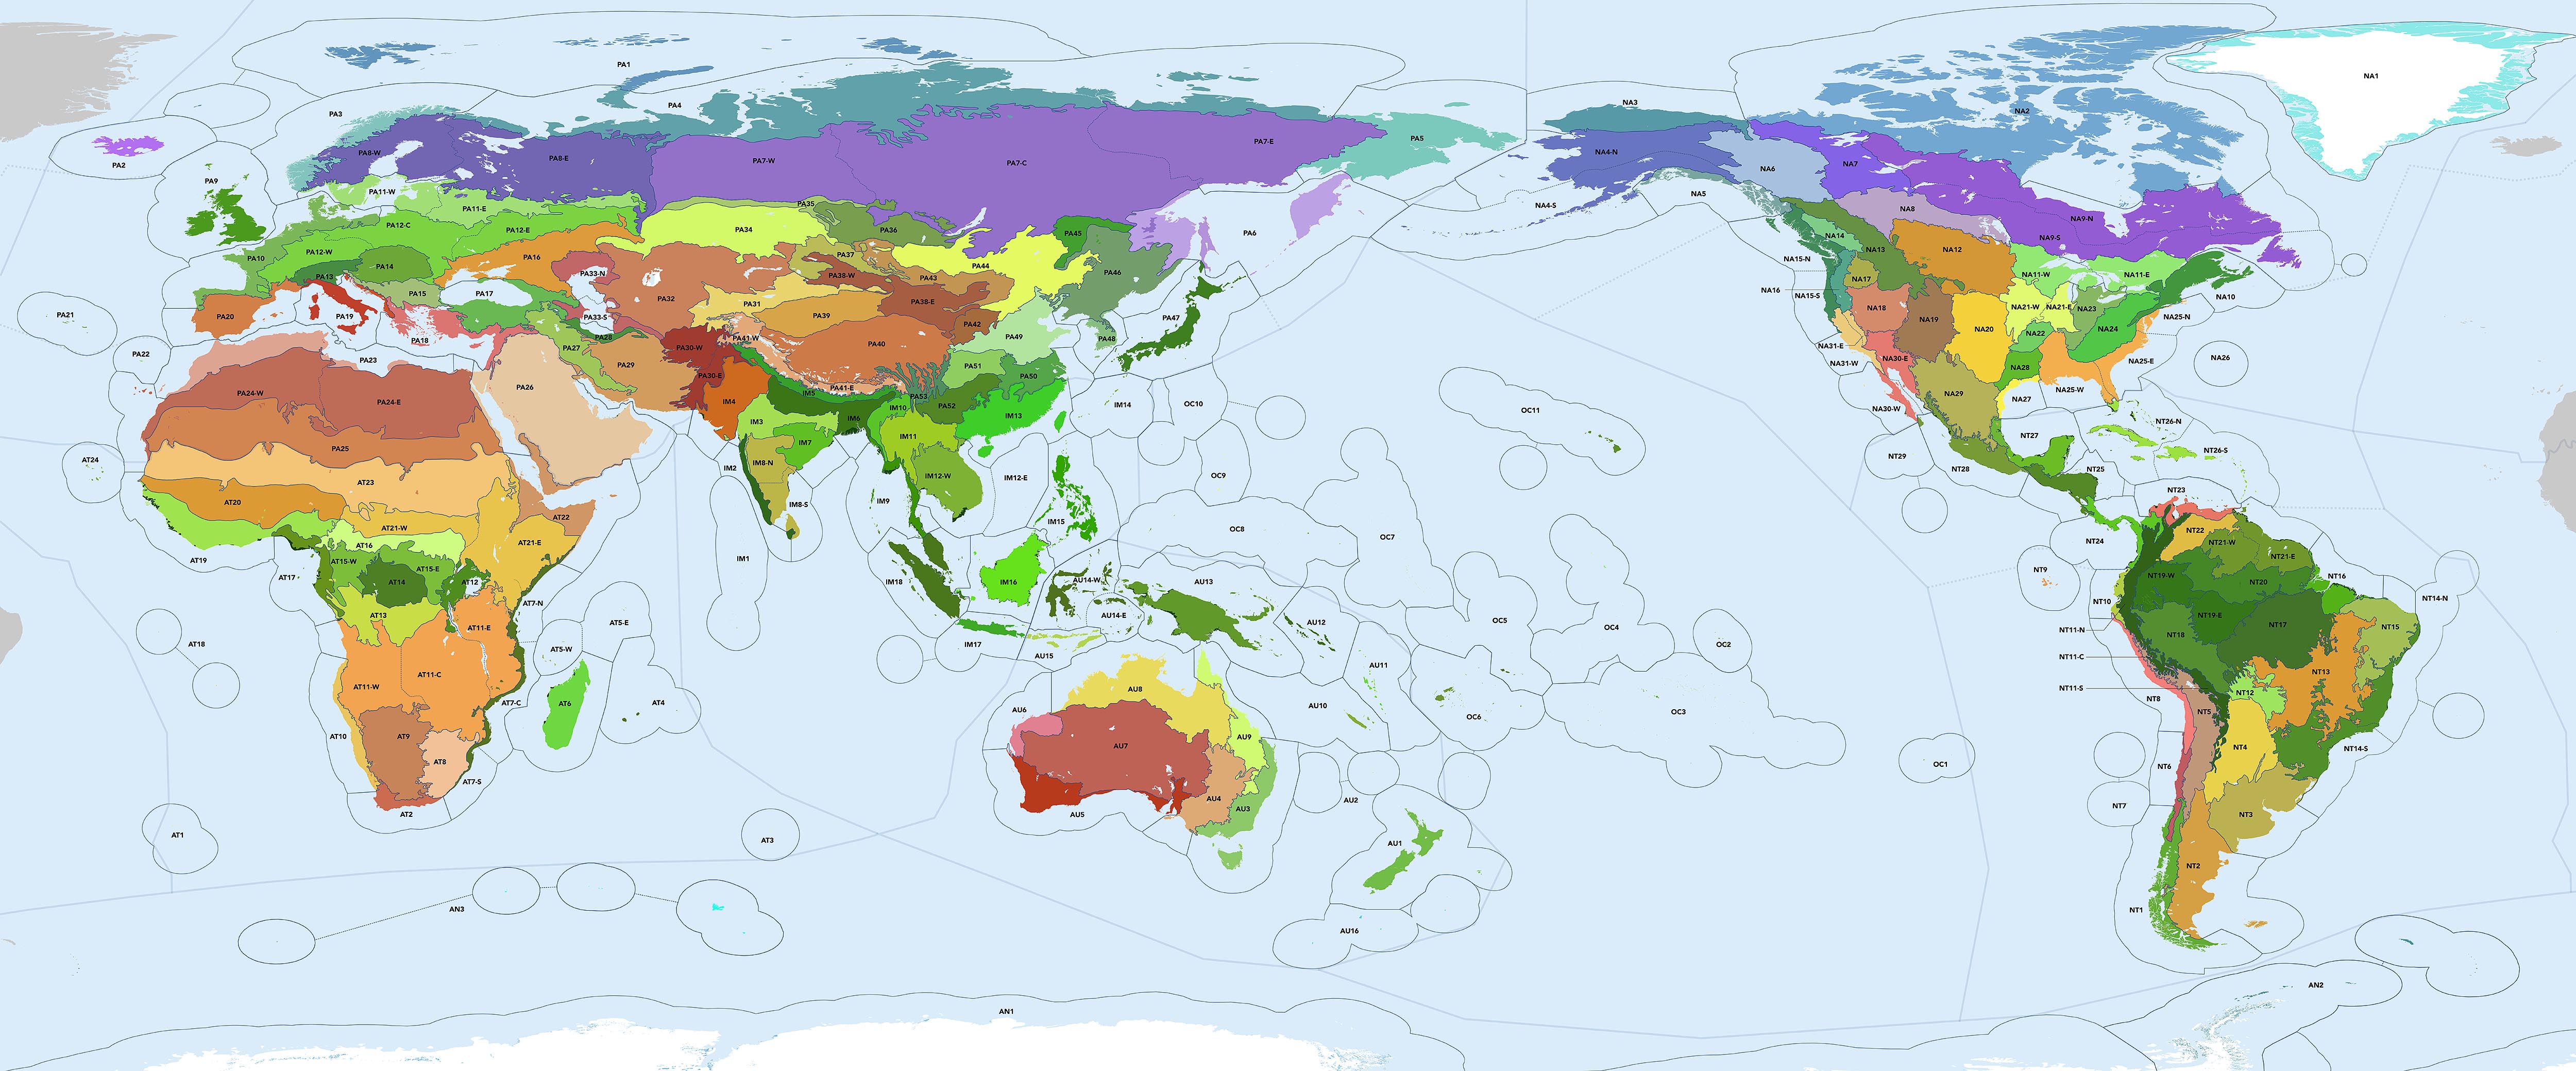 Bioregions of the Earth